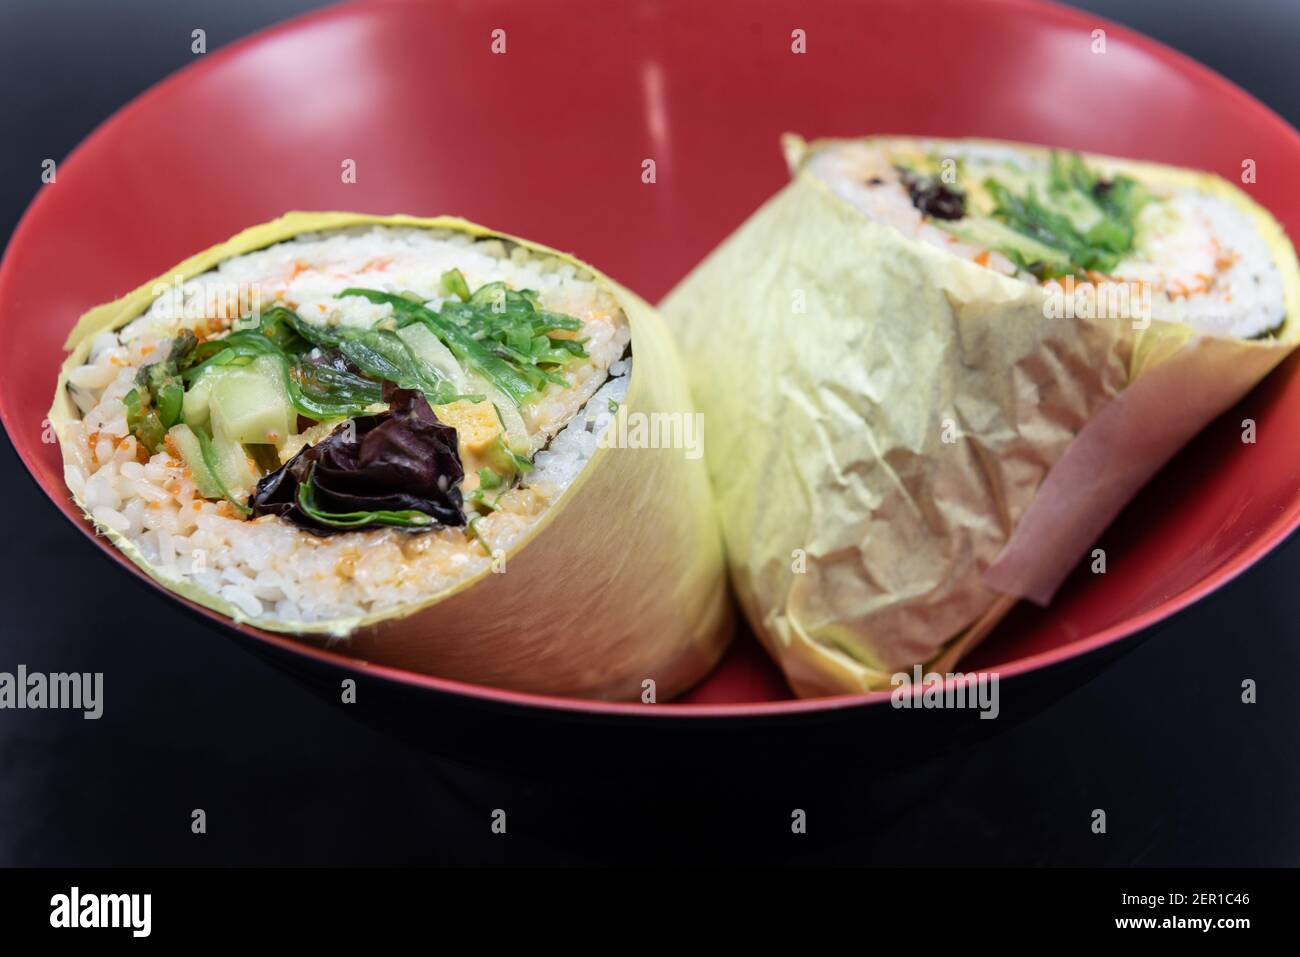 Tuna Poke burrito Pokerito wrapped with rice, fish, veggies all served in a bowl. Stock Photo